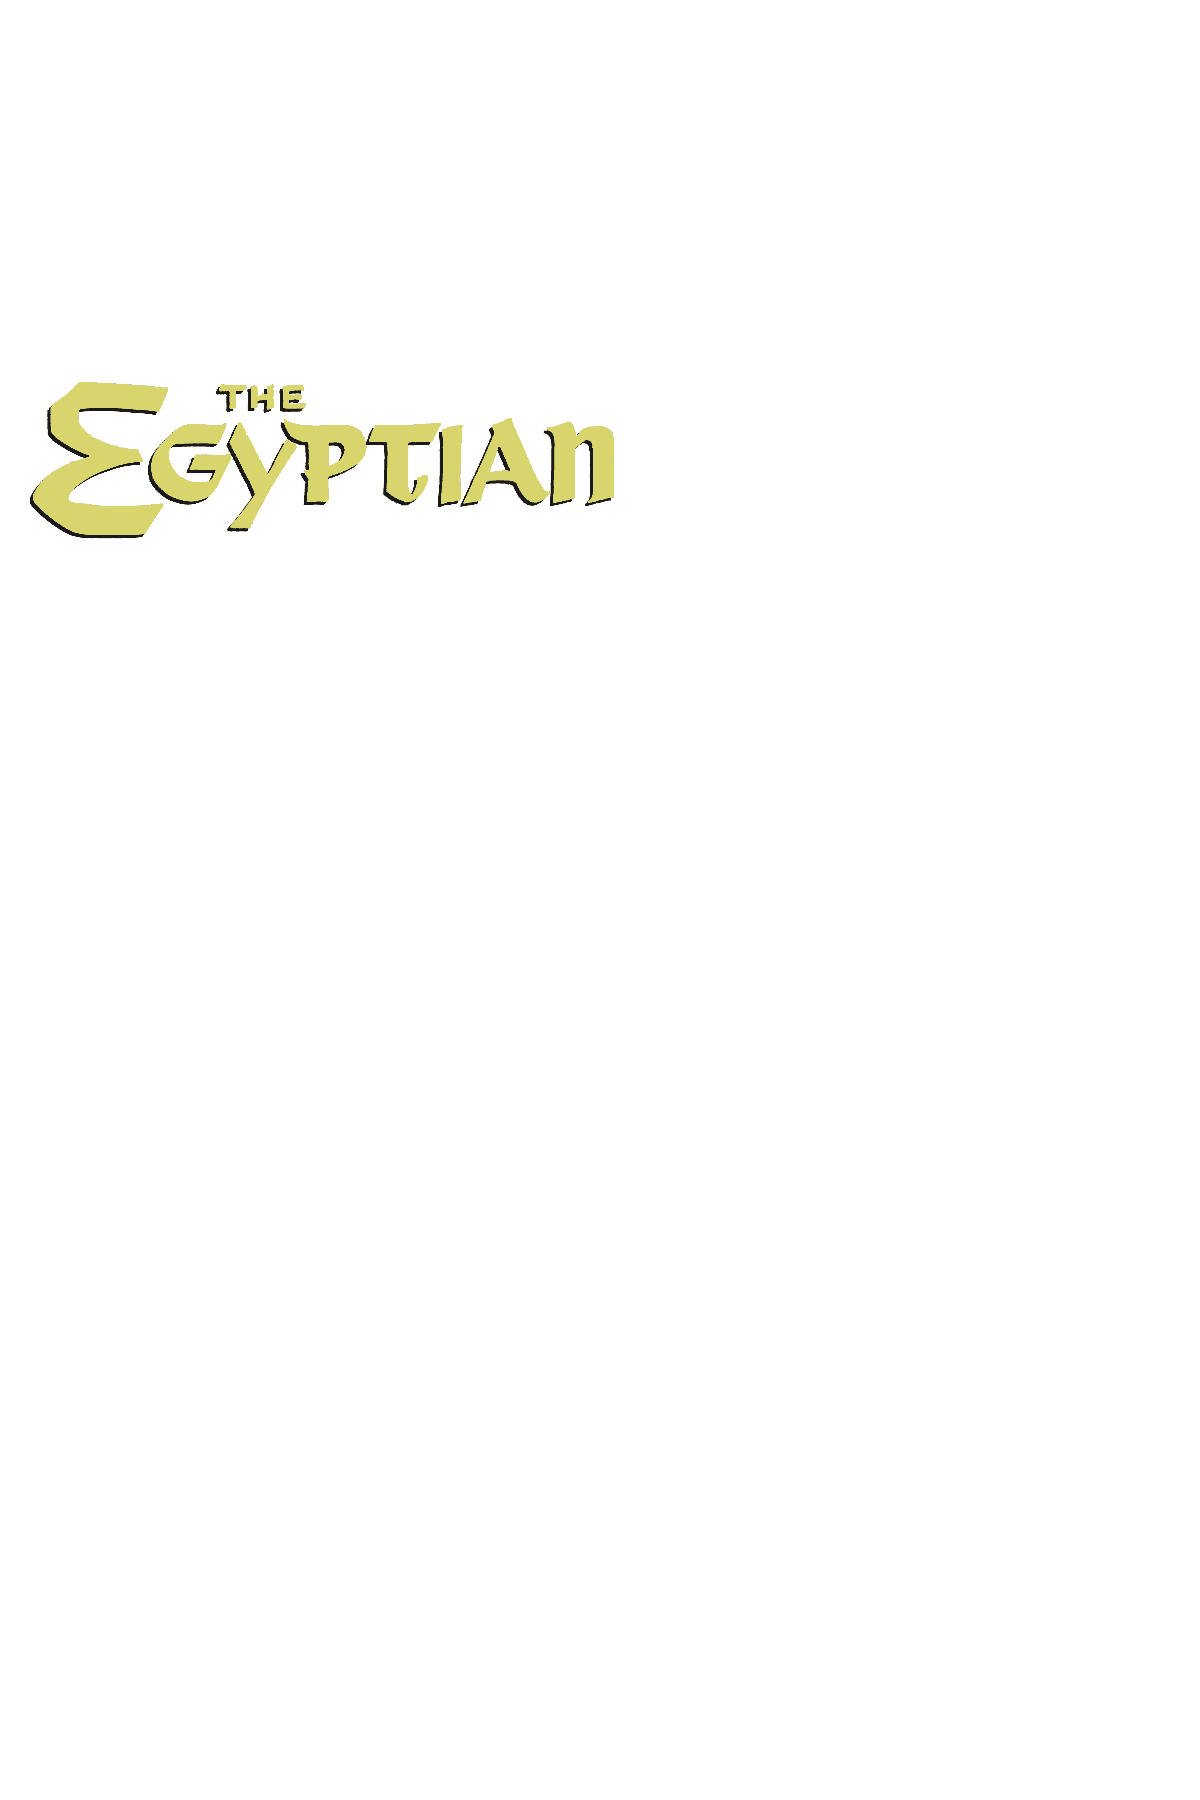 The Egyptian logo